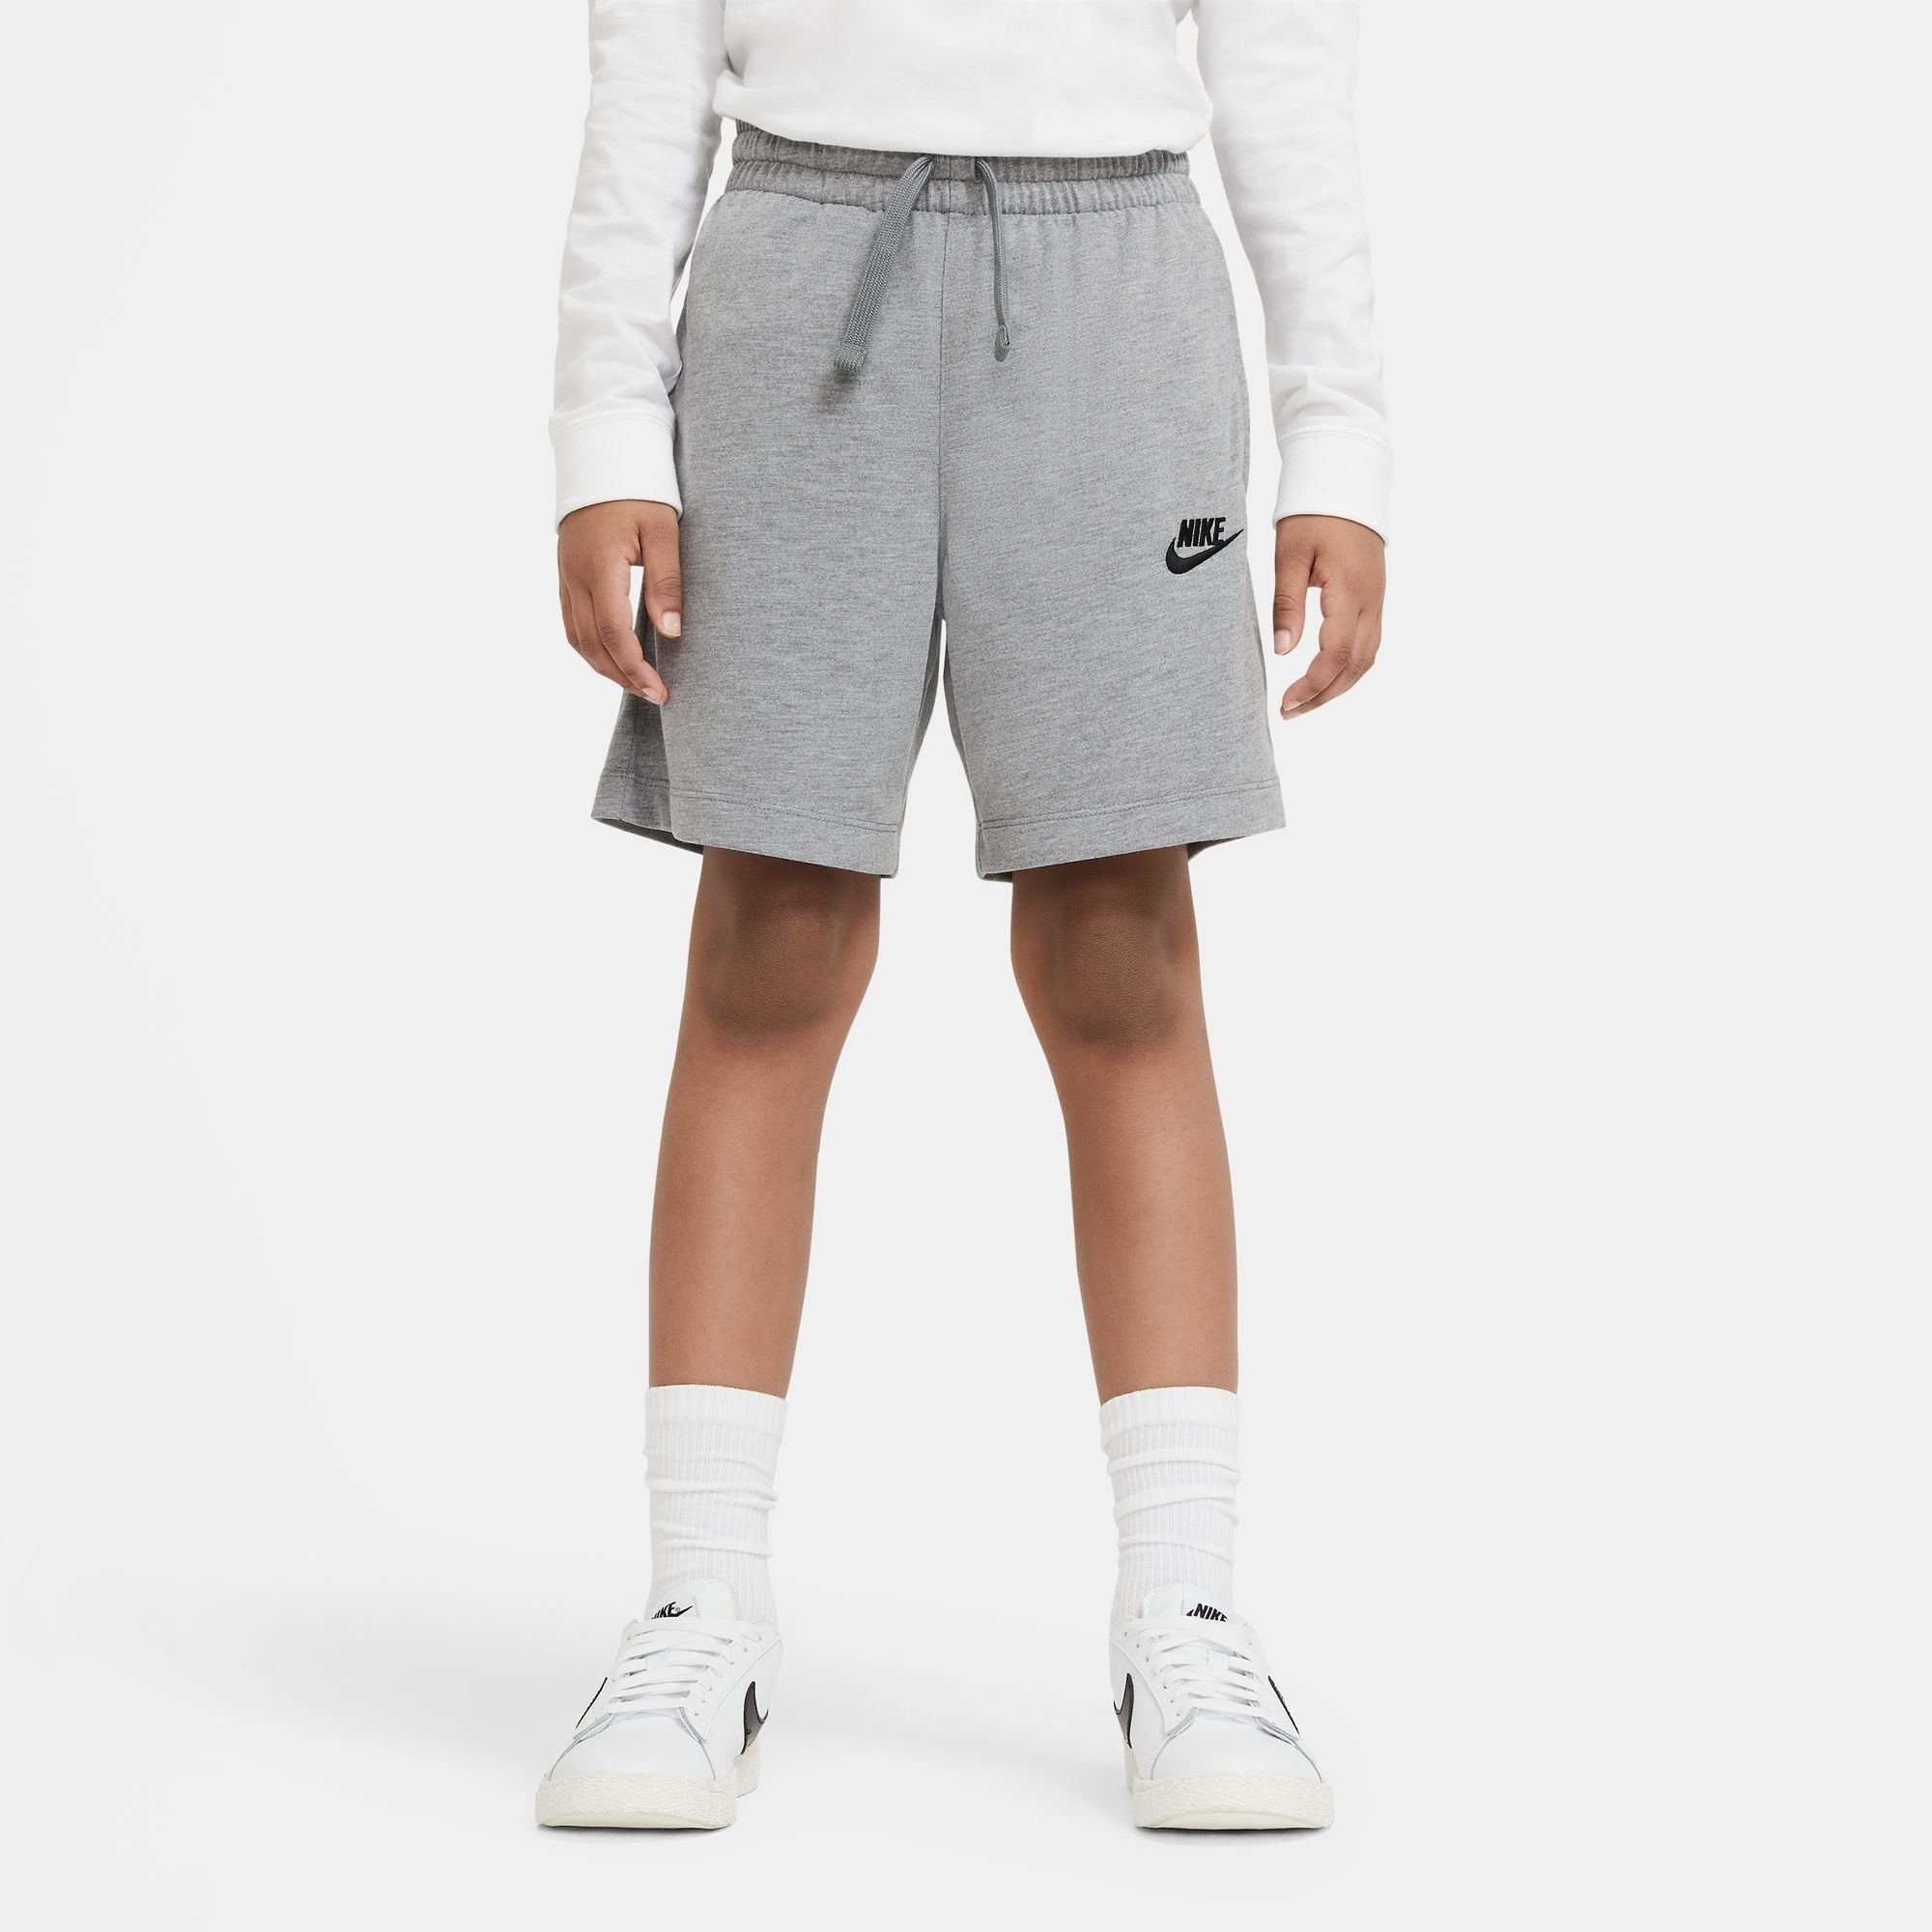 JERSEY Nike KIDS' BIG Shorts (BOYS) SHORTS grau Sportswear